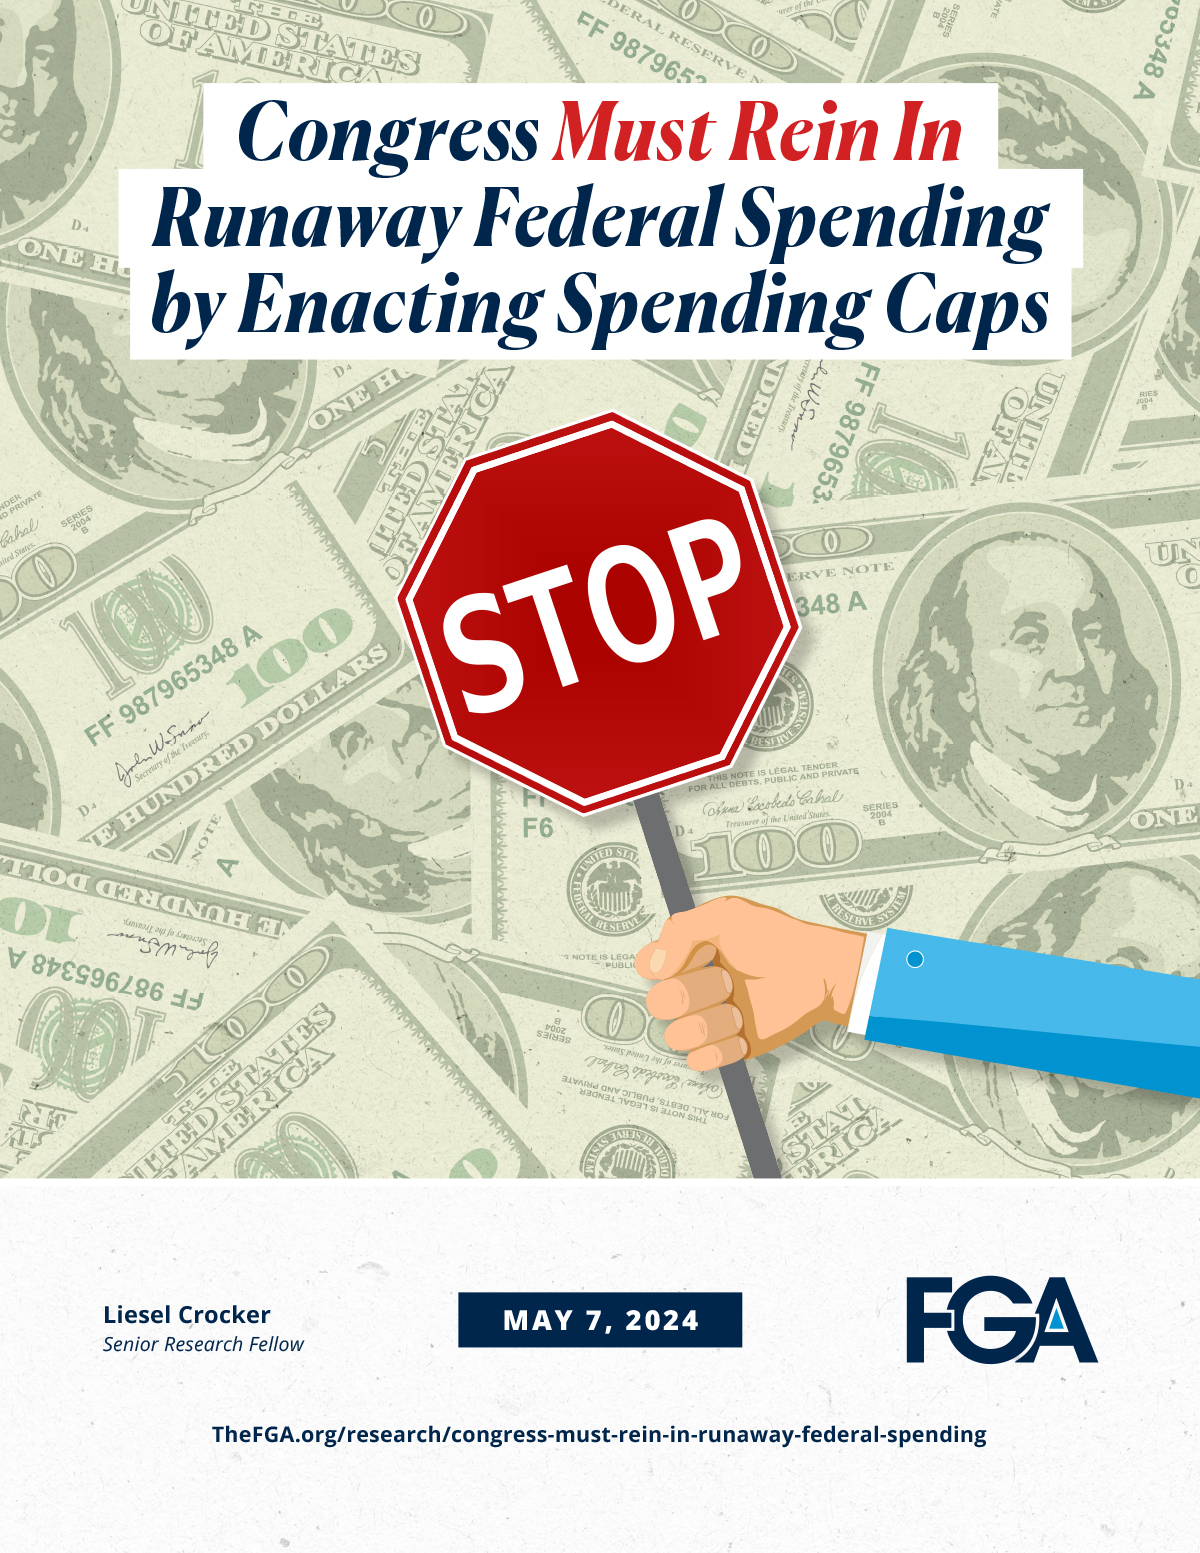 Congress Must Rein in Runaway Federal Spending by Enacting Spending Caps